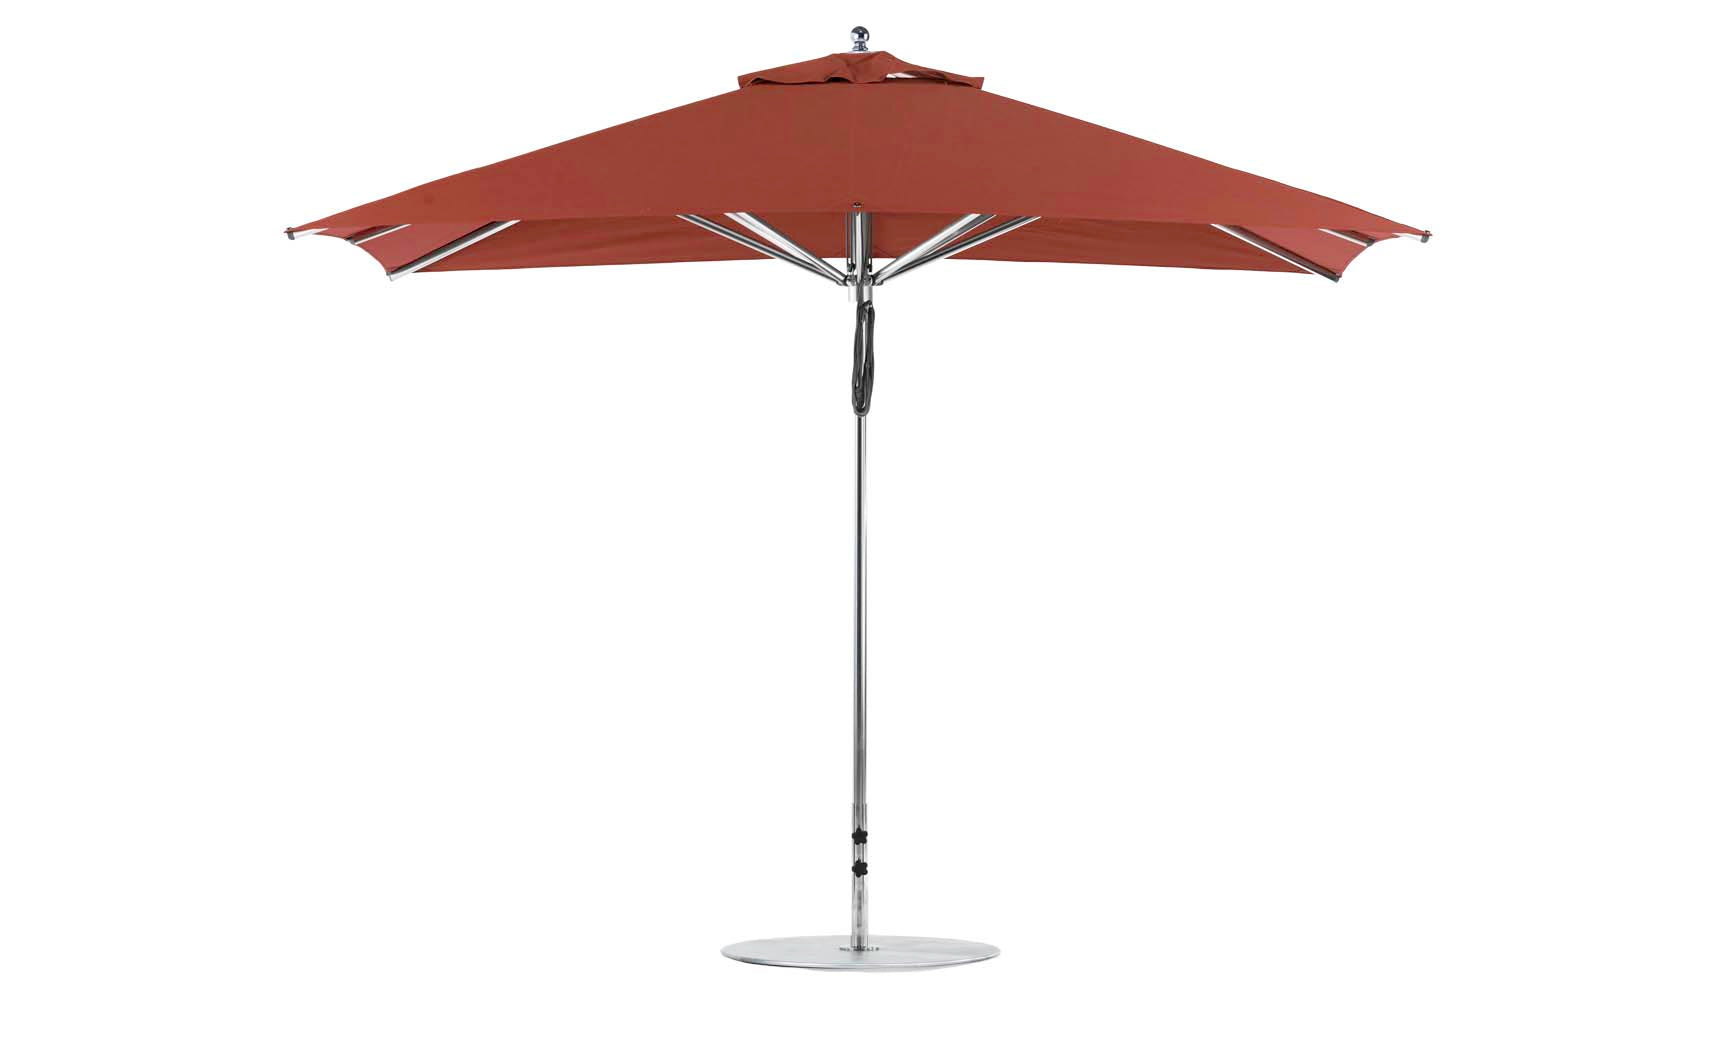 Premier Aluminum Umbrella - 8.5' Rectangle Pulley